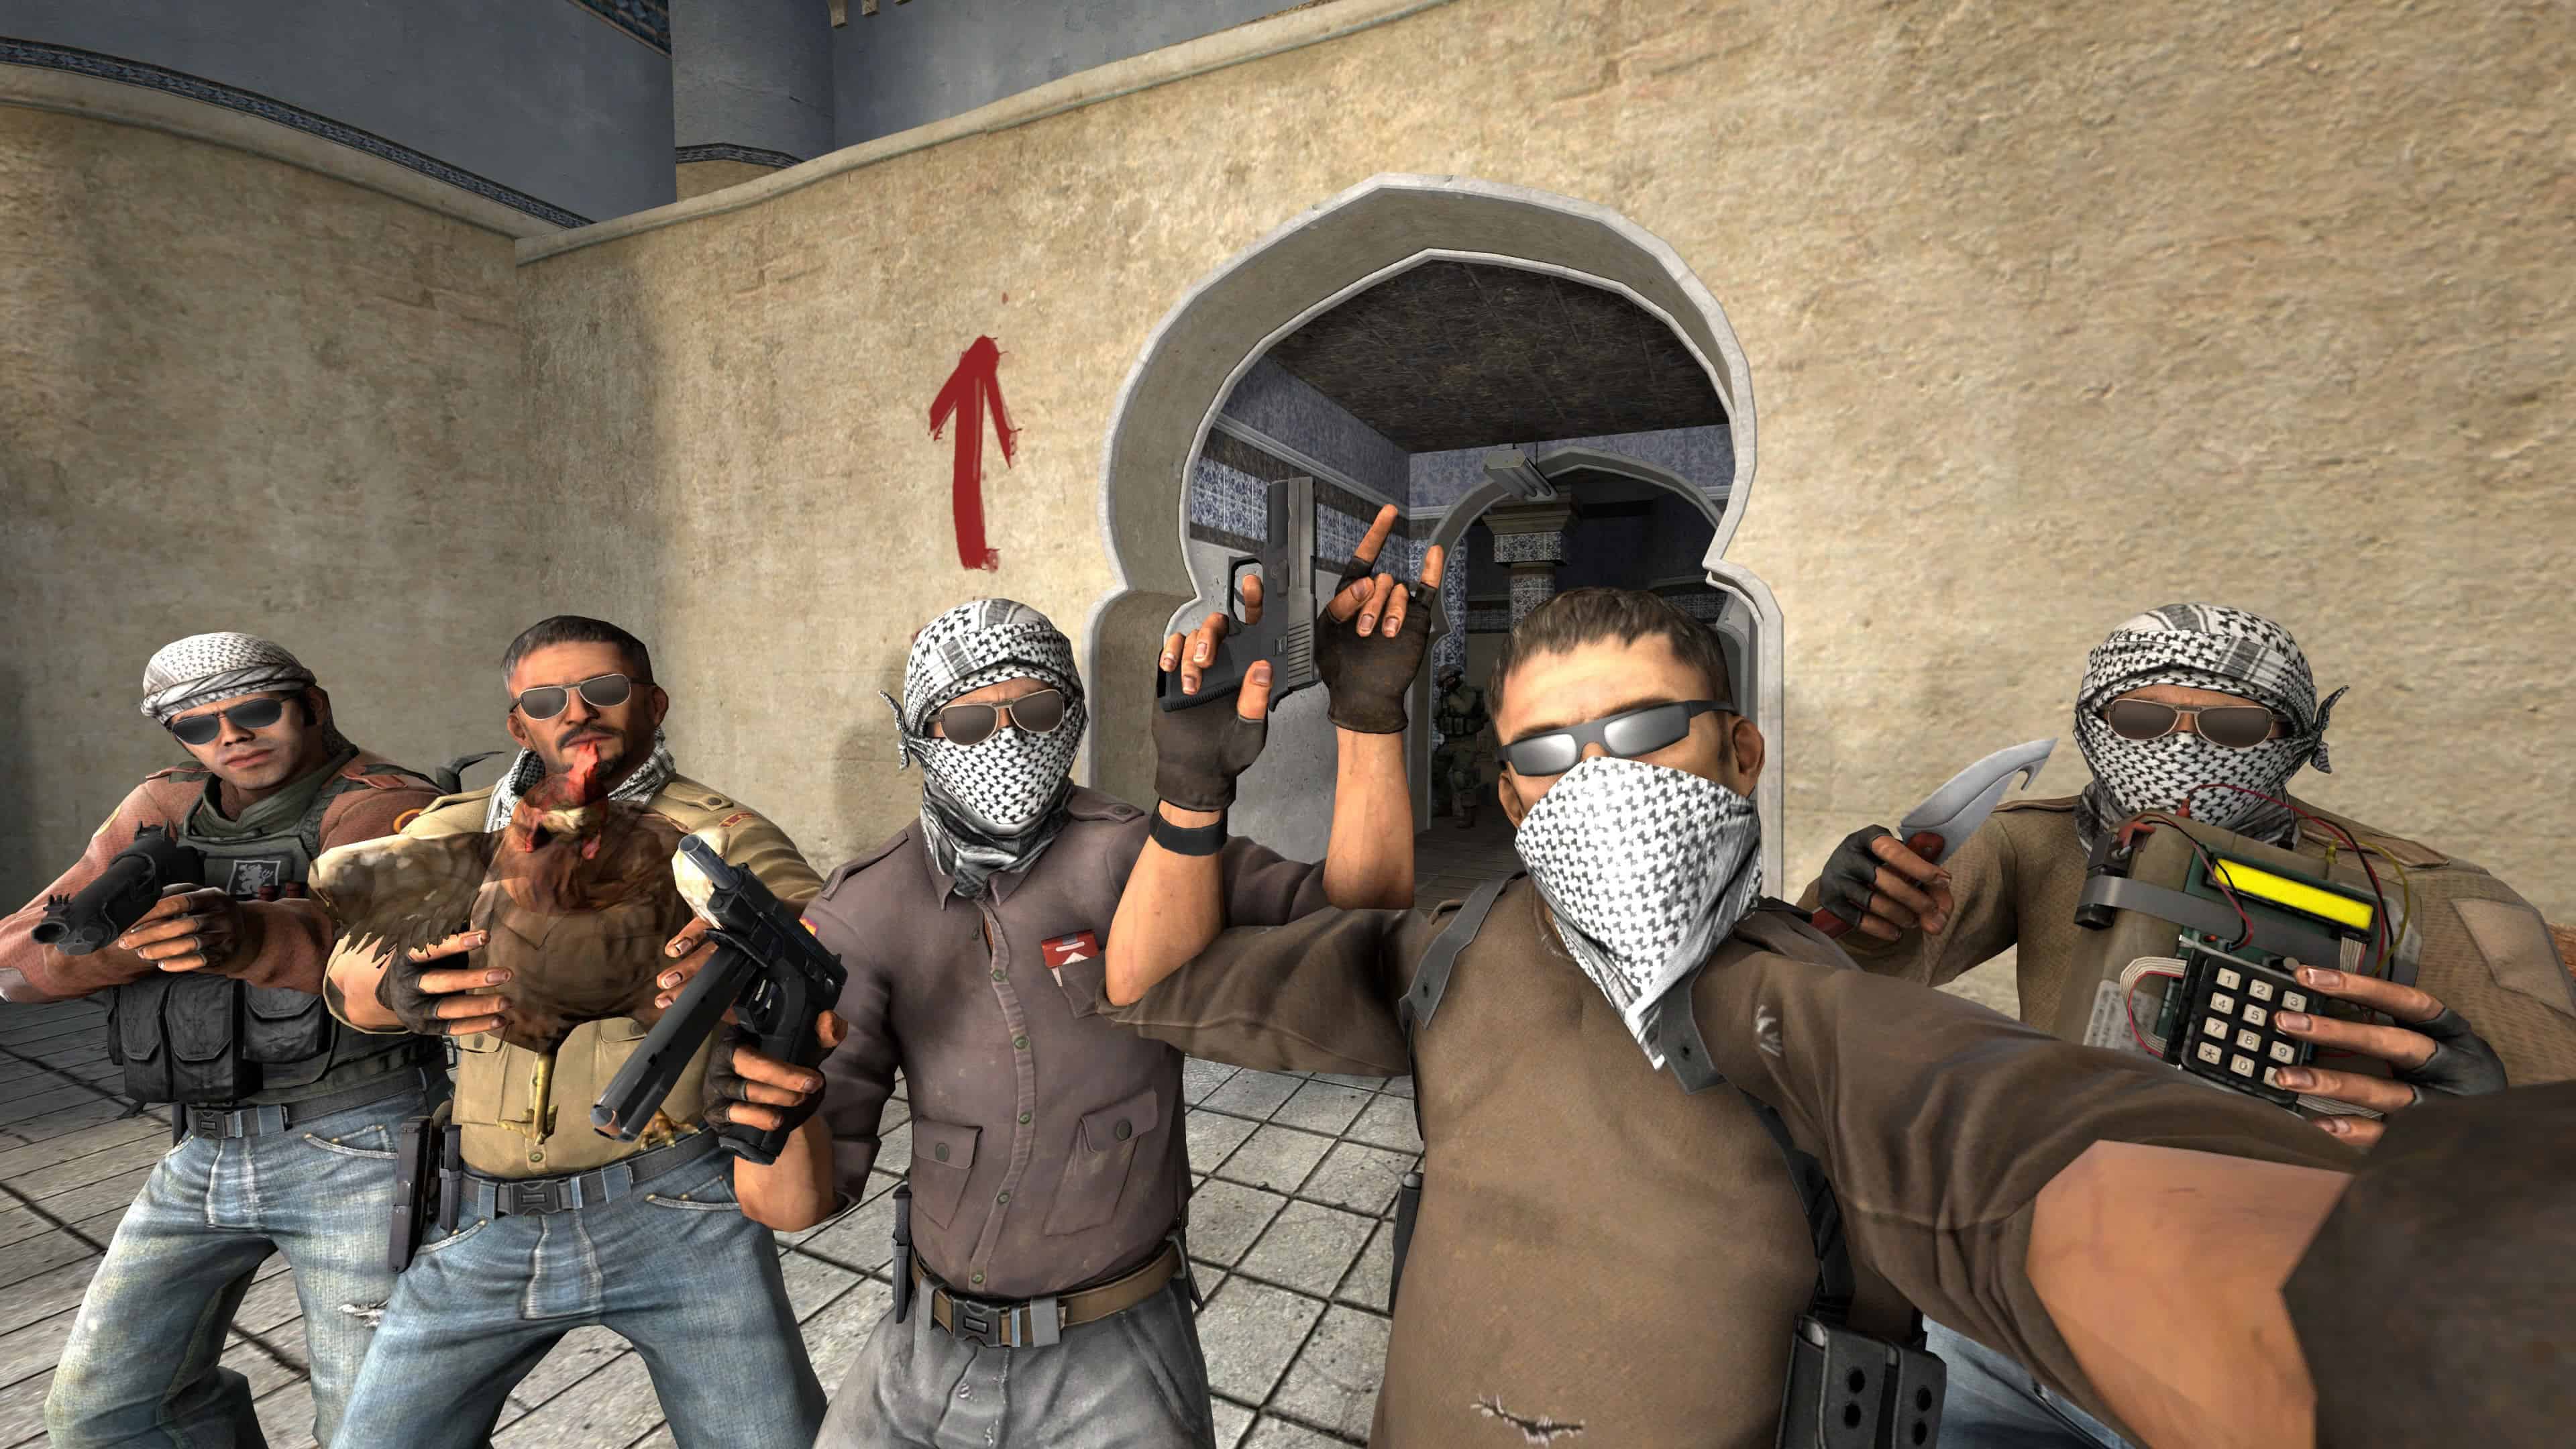 Cs Go Counter Strike Global Offensive Selfie UHD 4k Wallpaper